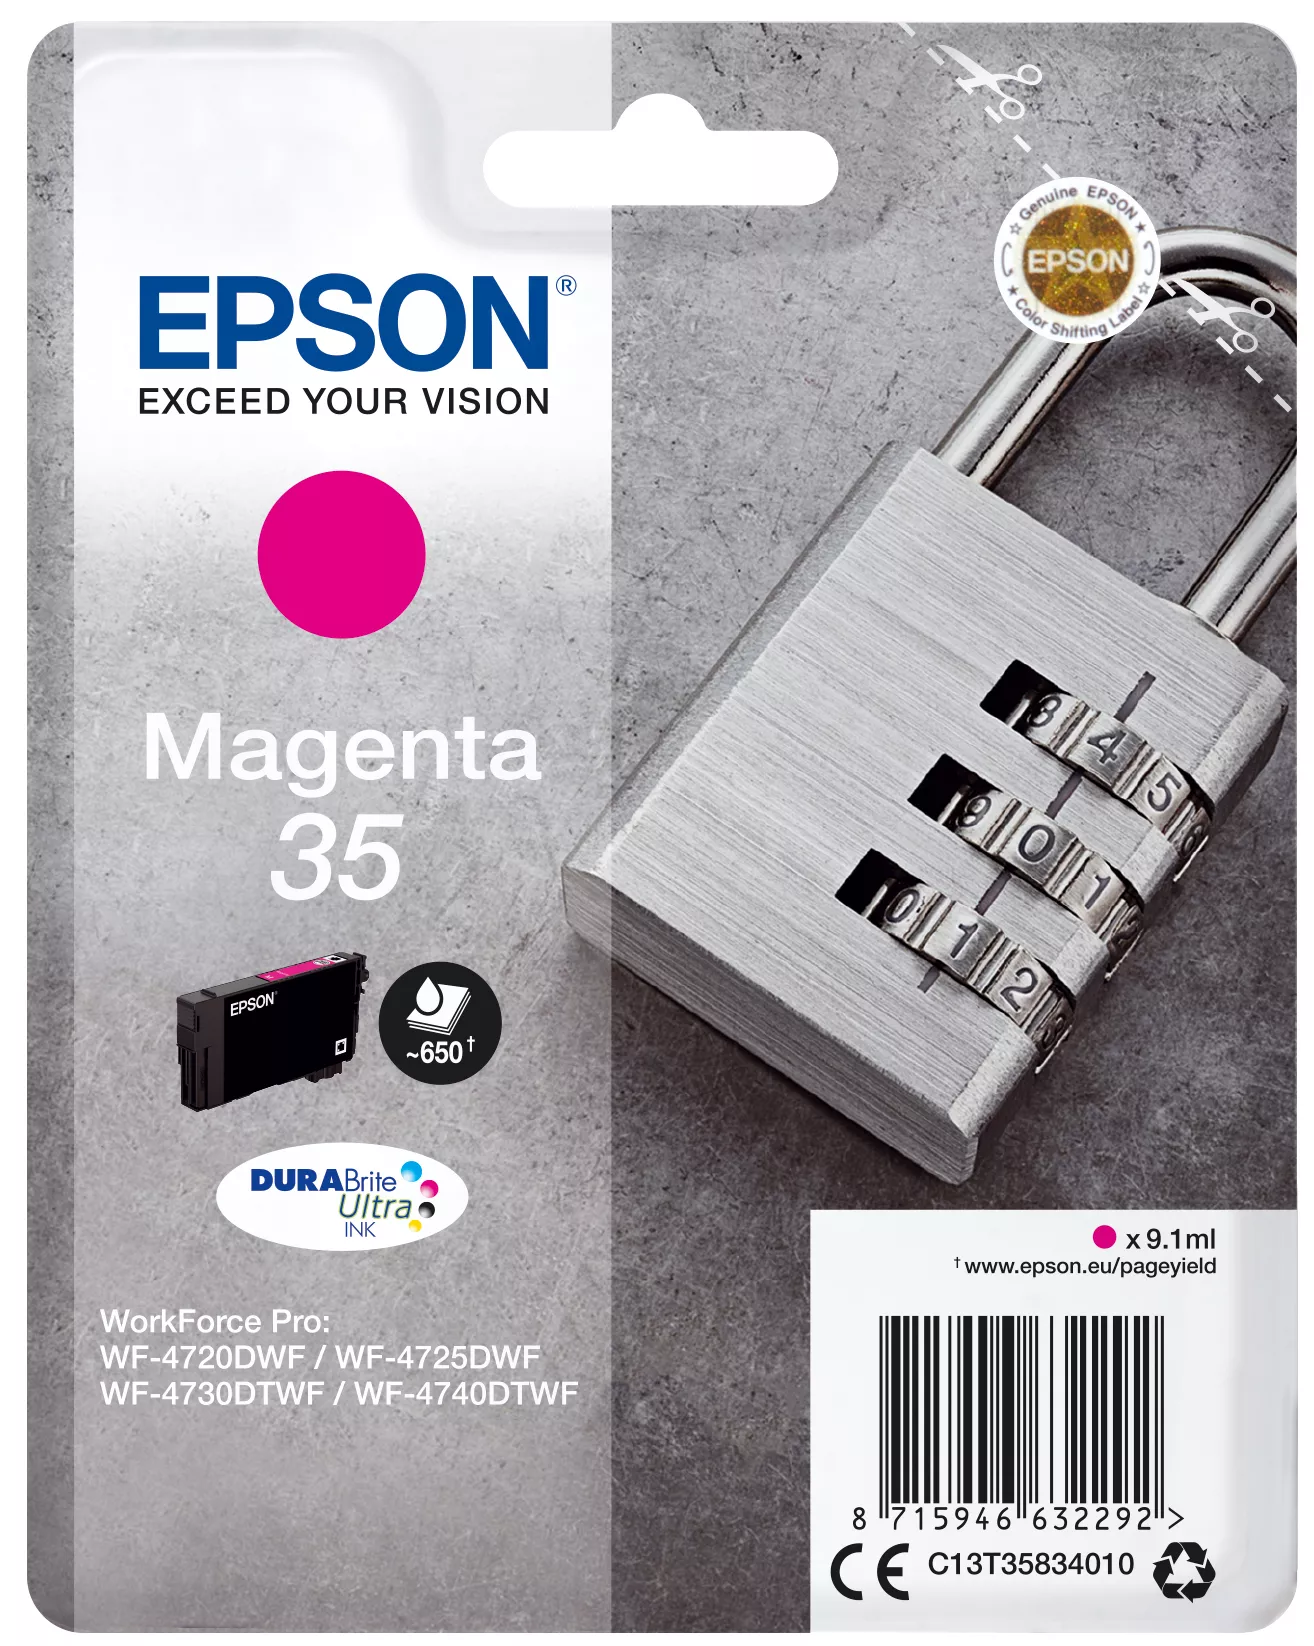 Achat EPSON 35 Ink Magenta 9.1ml Blister - 8715946632308